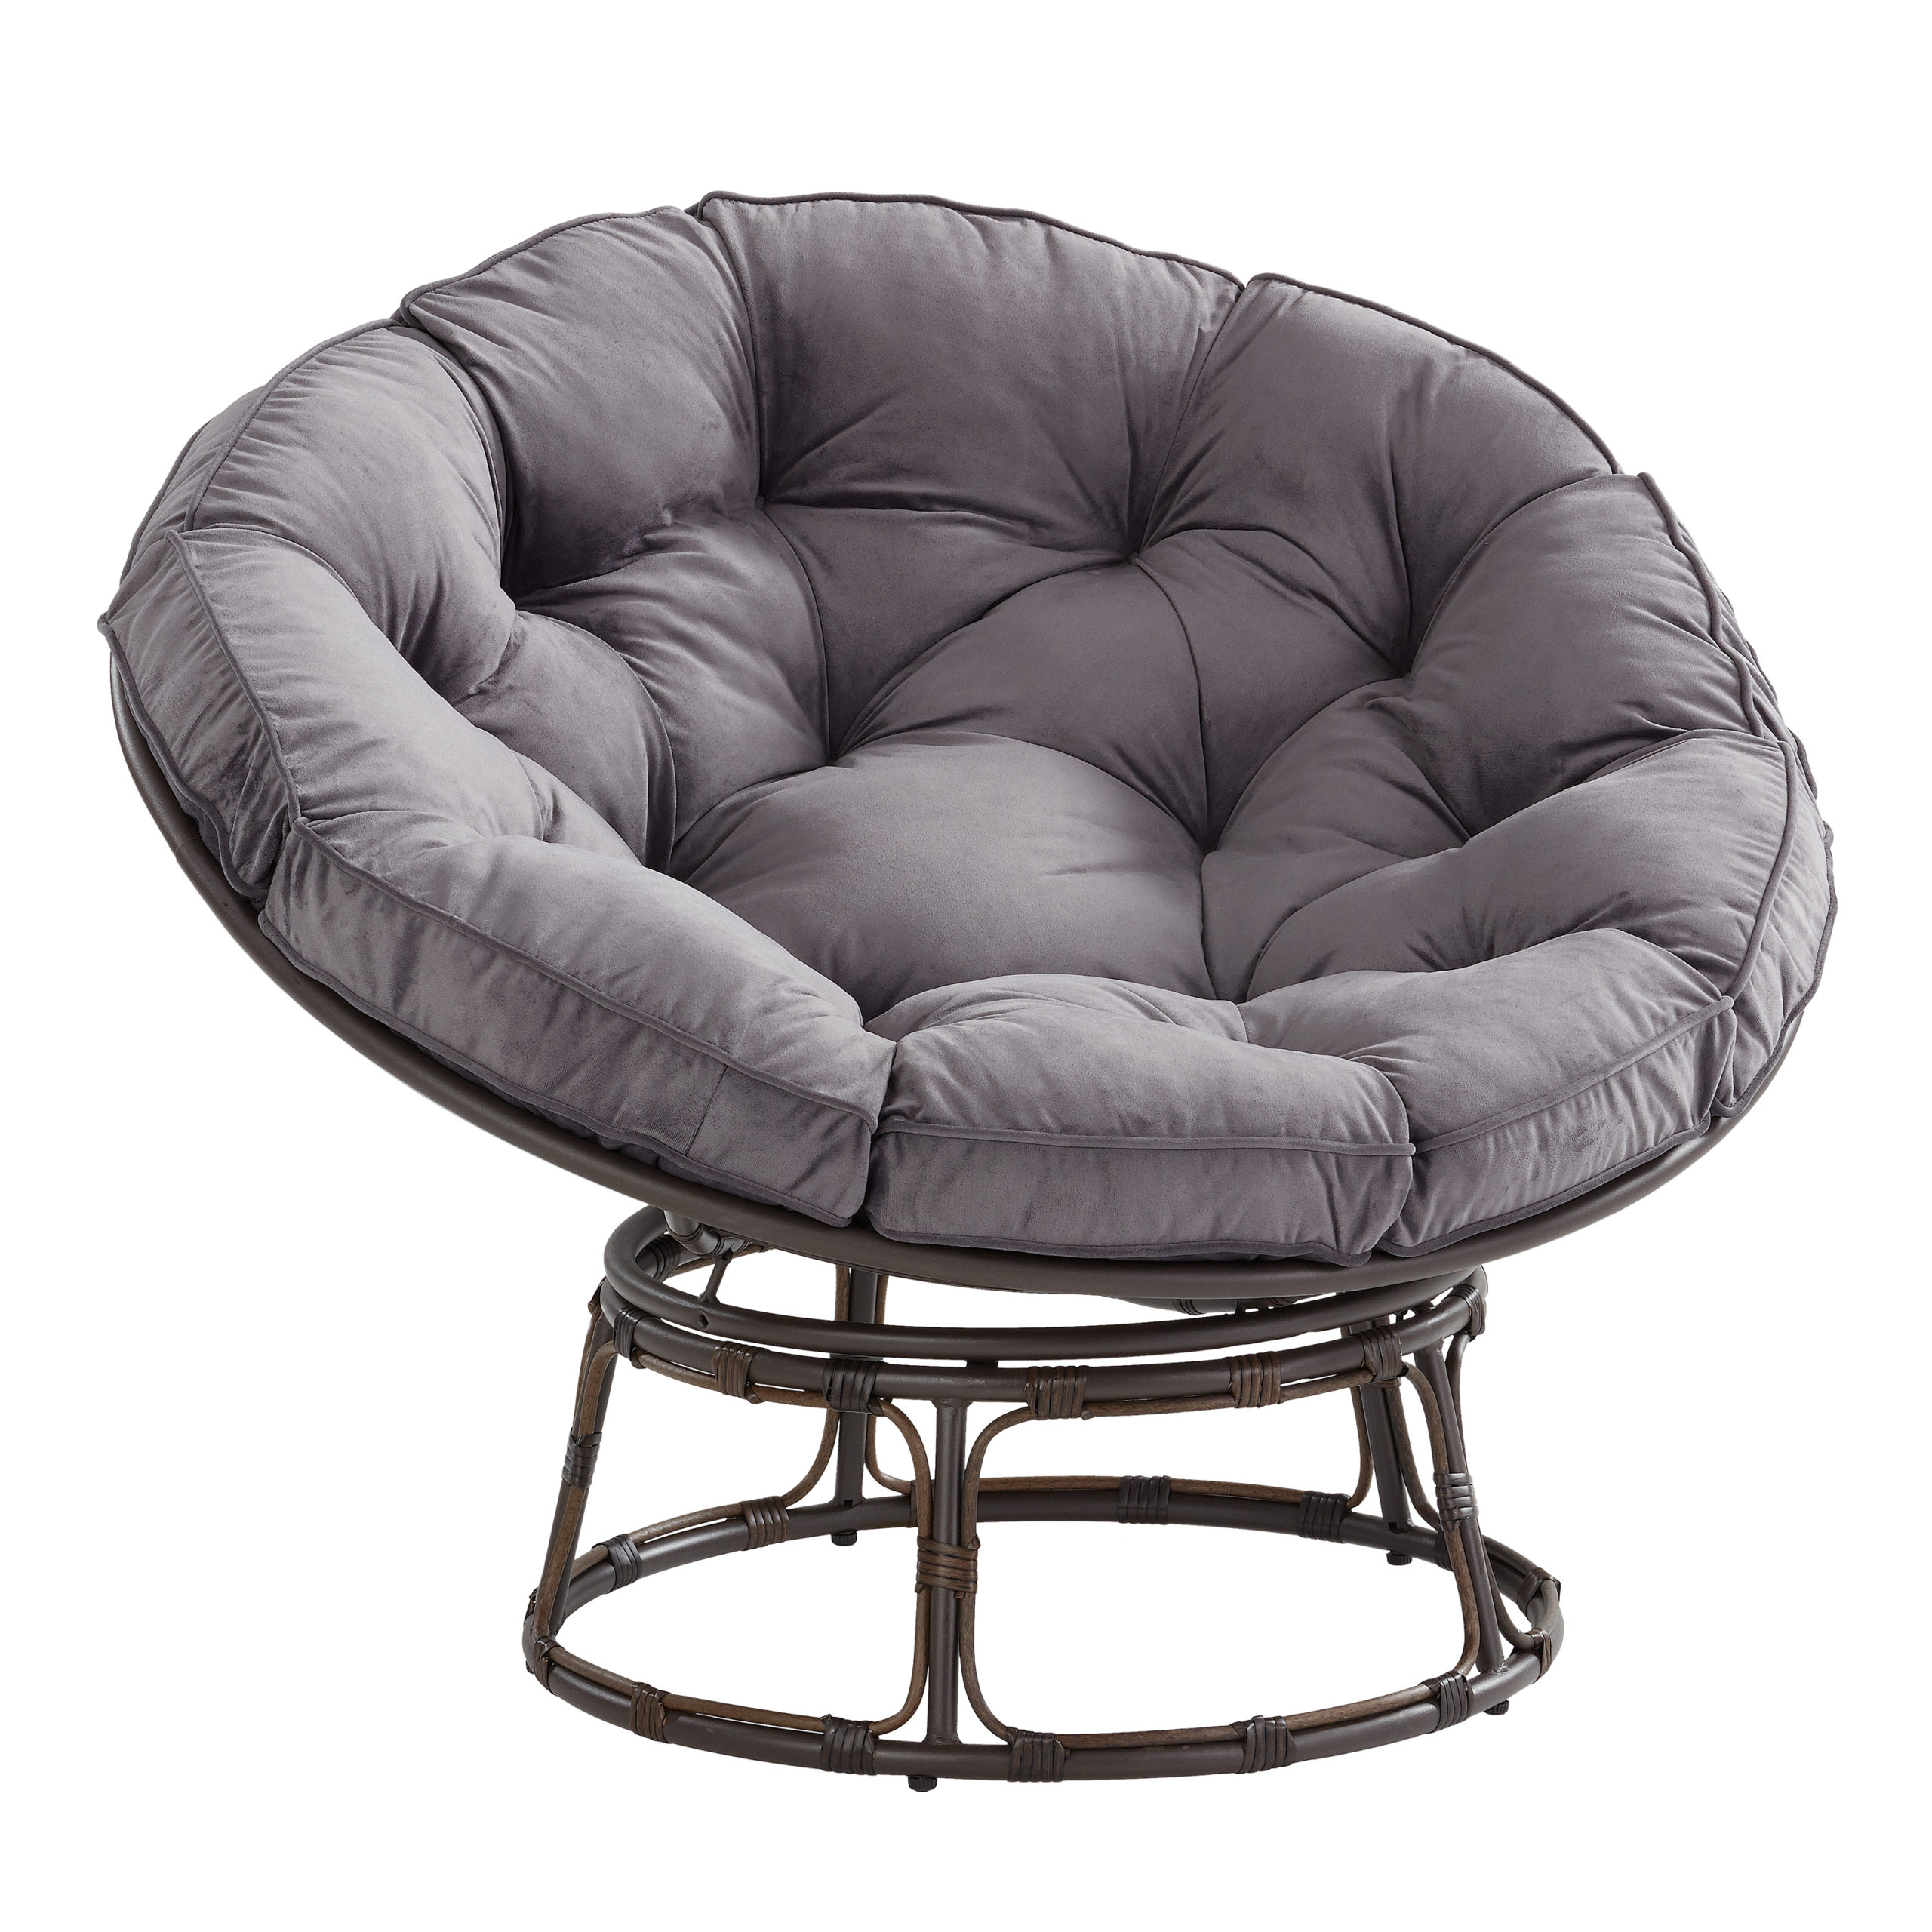 Better-Homes-Gardens-Papasan-Chair-with-Fabric-Cushion-Charcoal-Gray